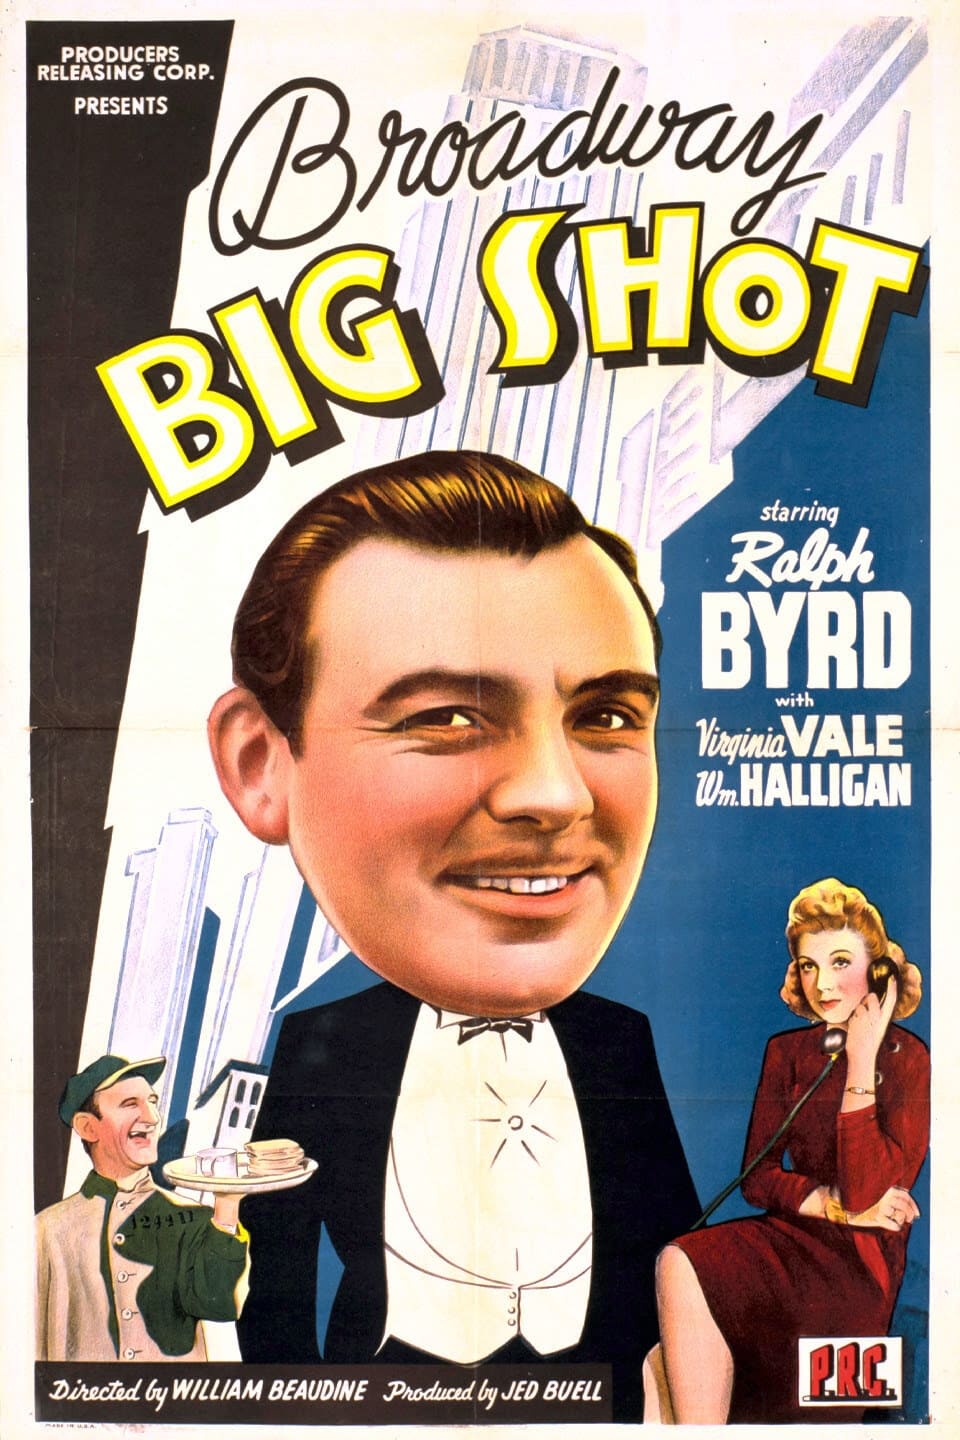 Broadway Big Shot (1942)